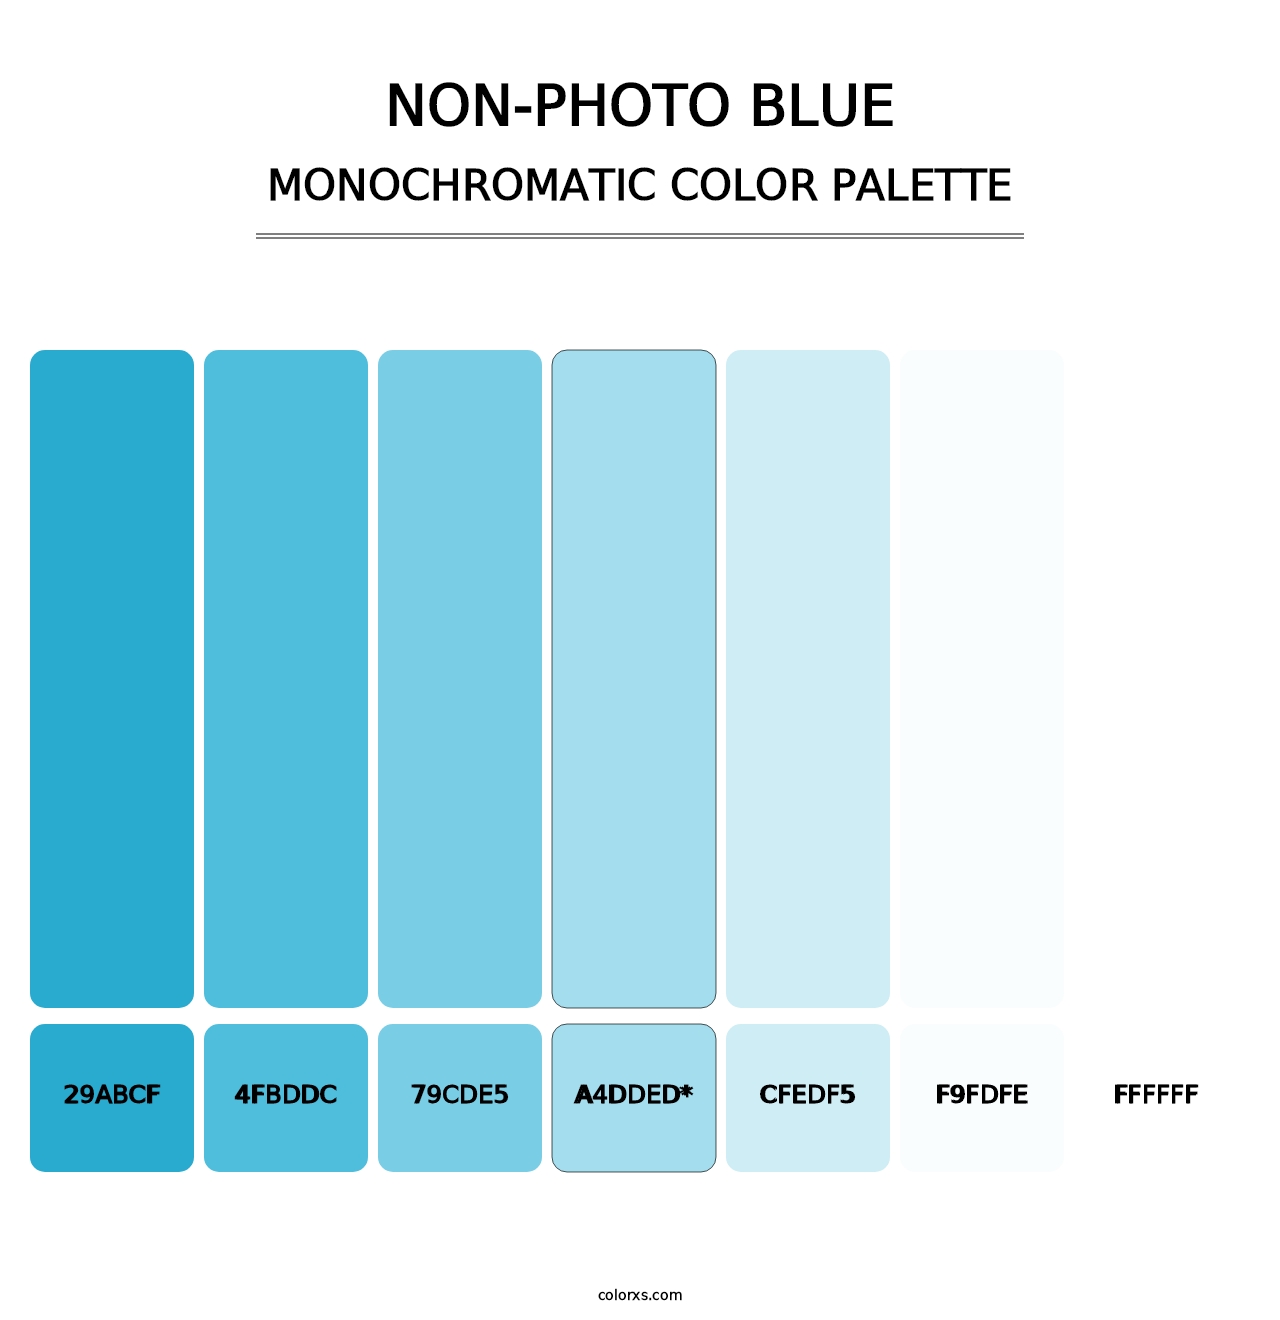 Non-photo Blue - Monochromatic Color Palette